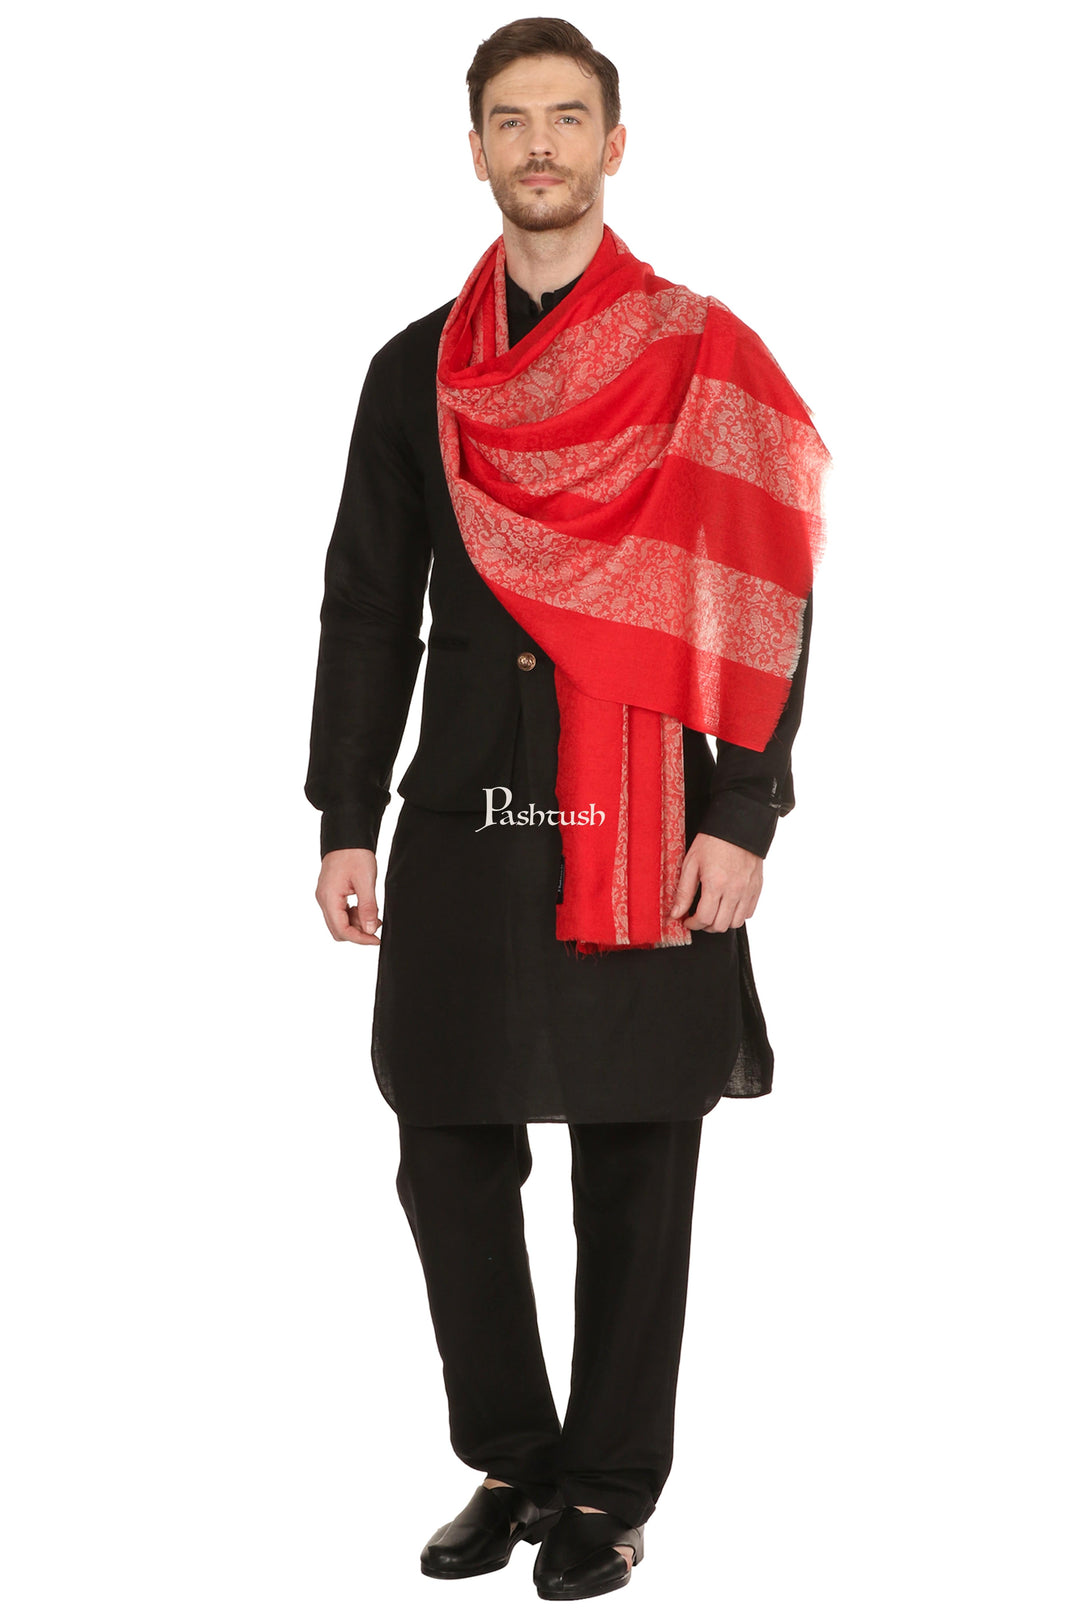 Pashtush India Mens Scarves Stoles and Mufflers Pashtush Mens Fine Wool Reversible Muffler, Soft And Warm - Red